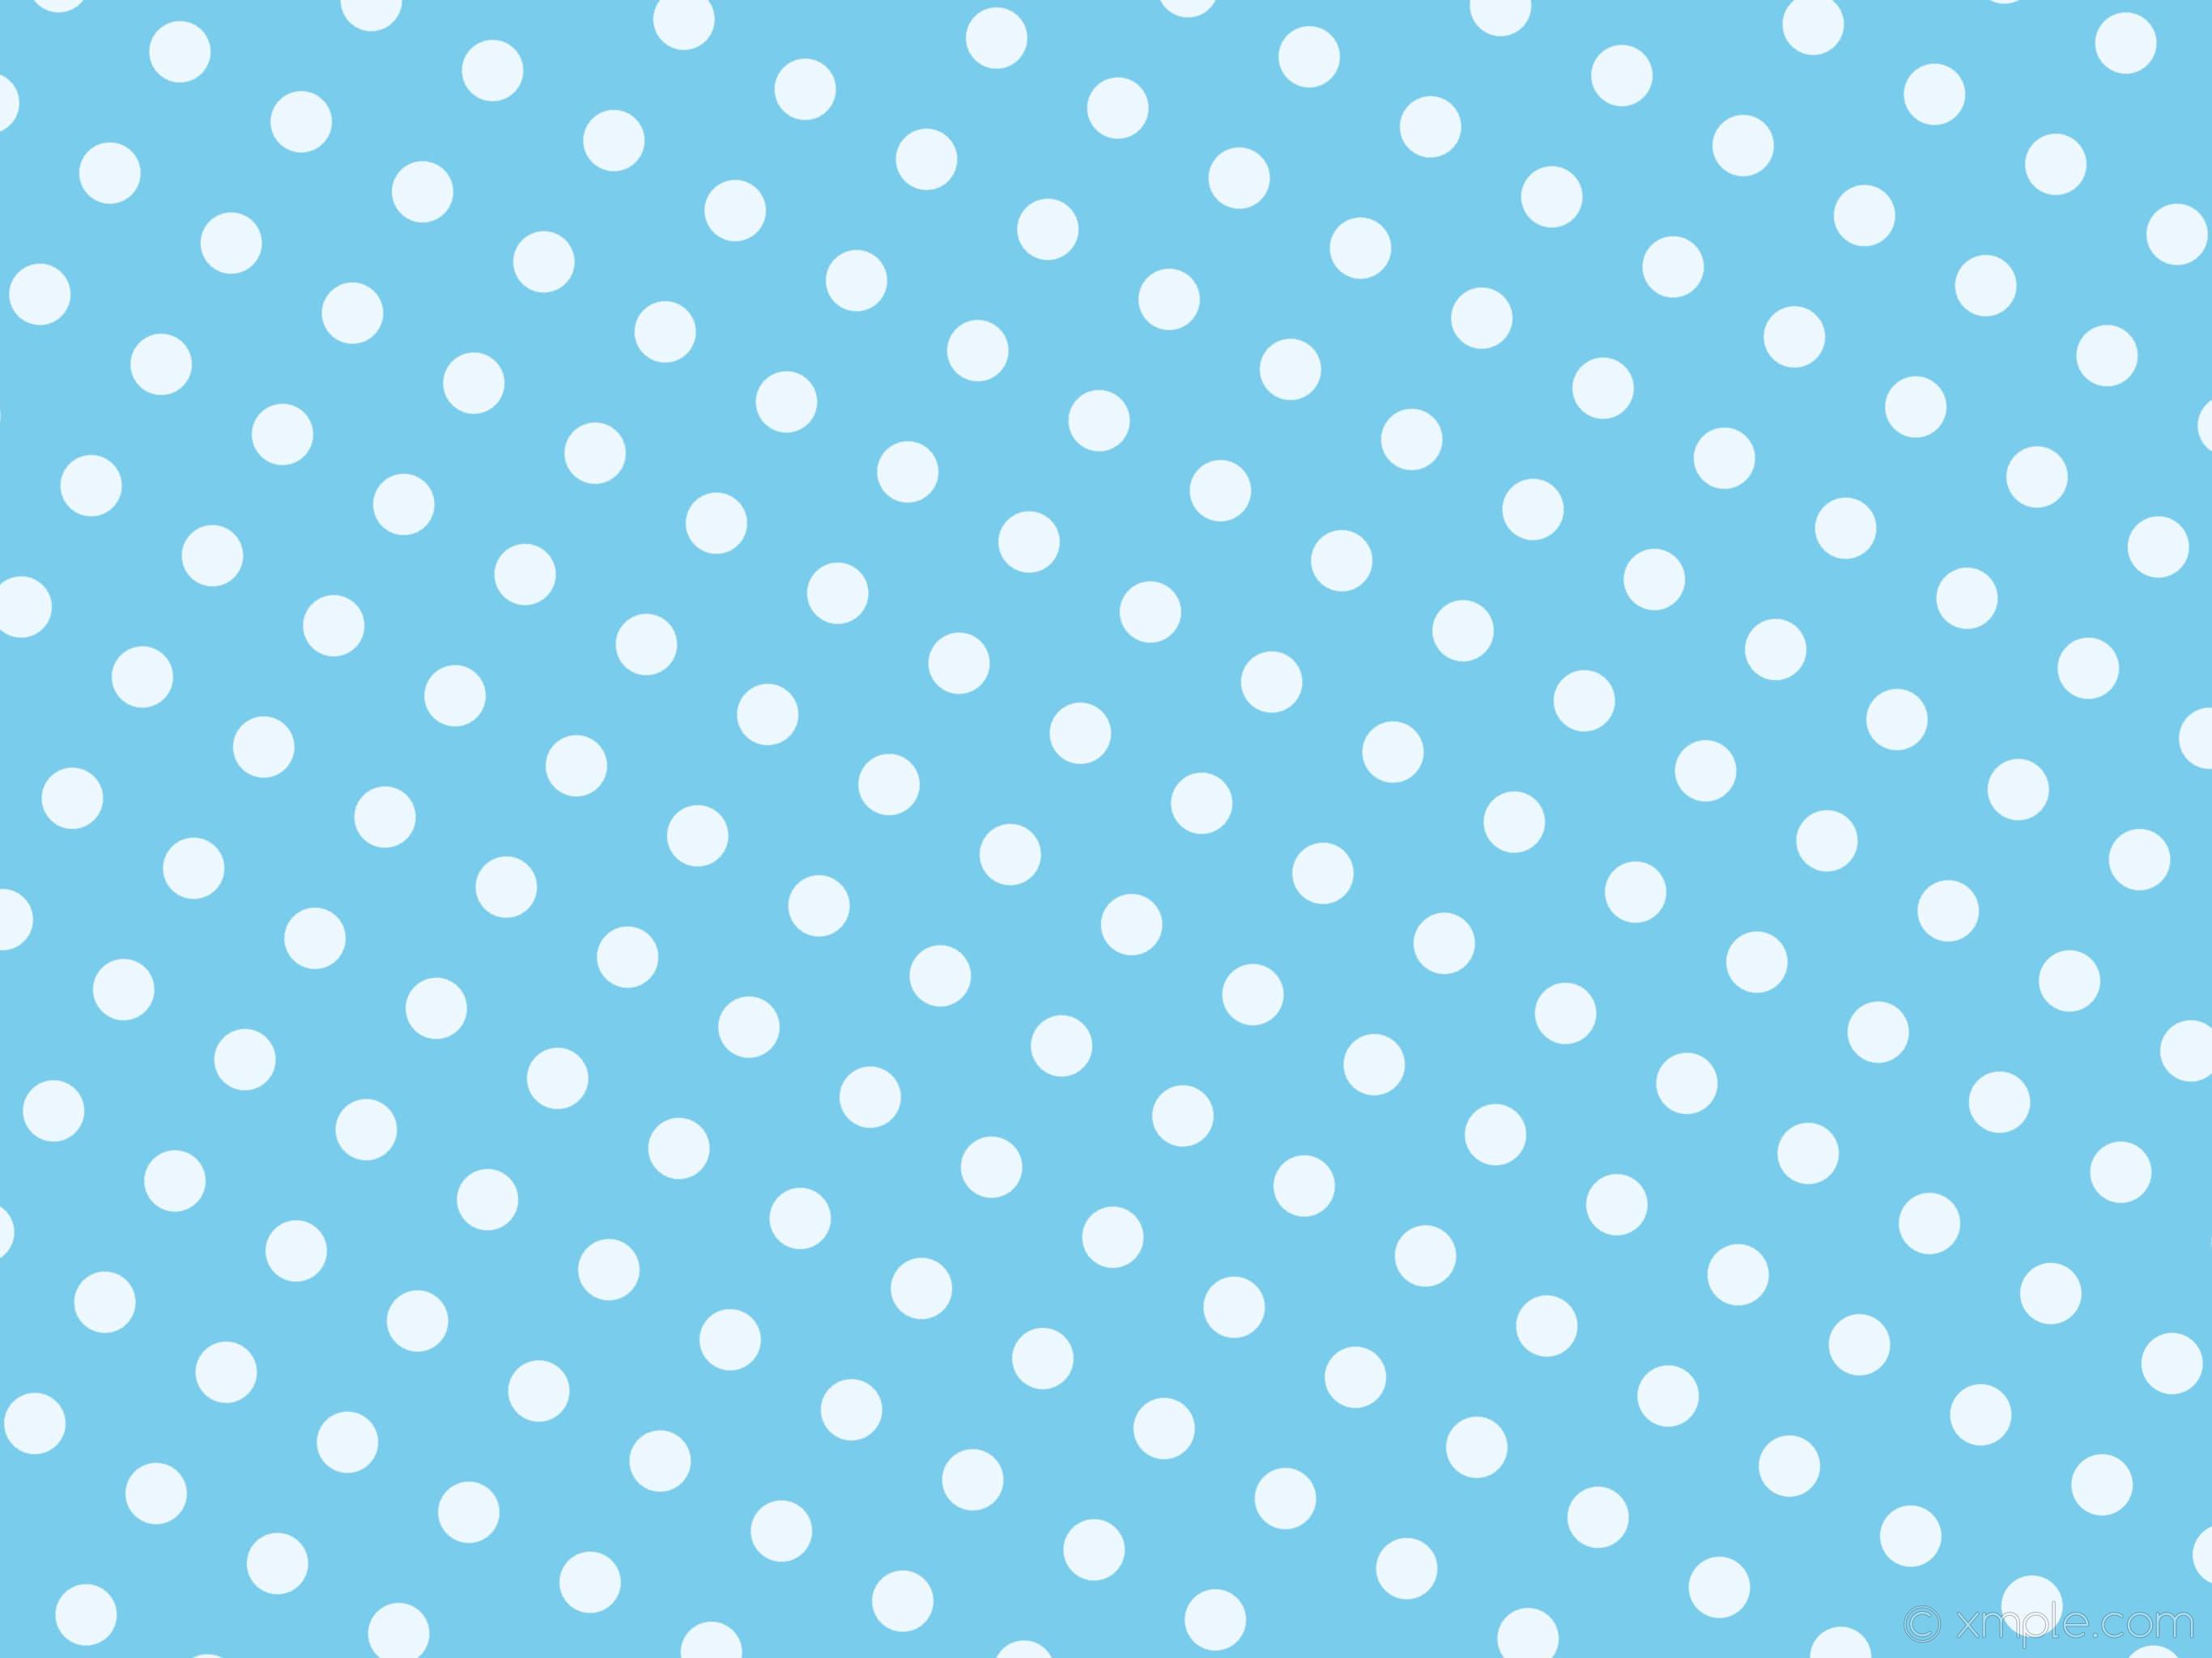 9. Light Blue and Polka Dot Nail Design - wide 6